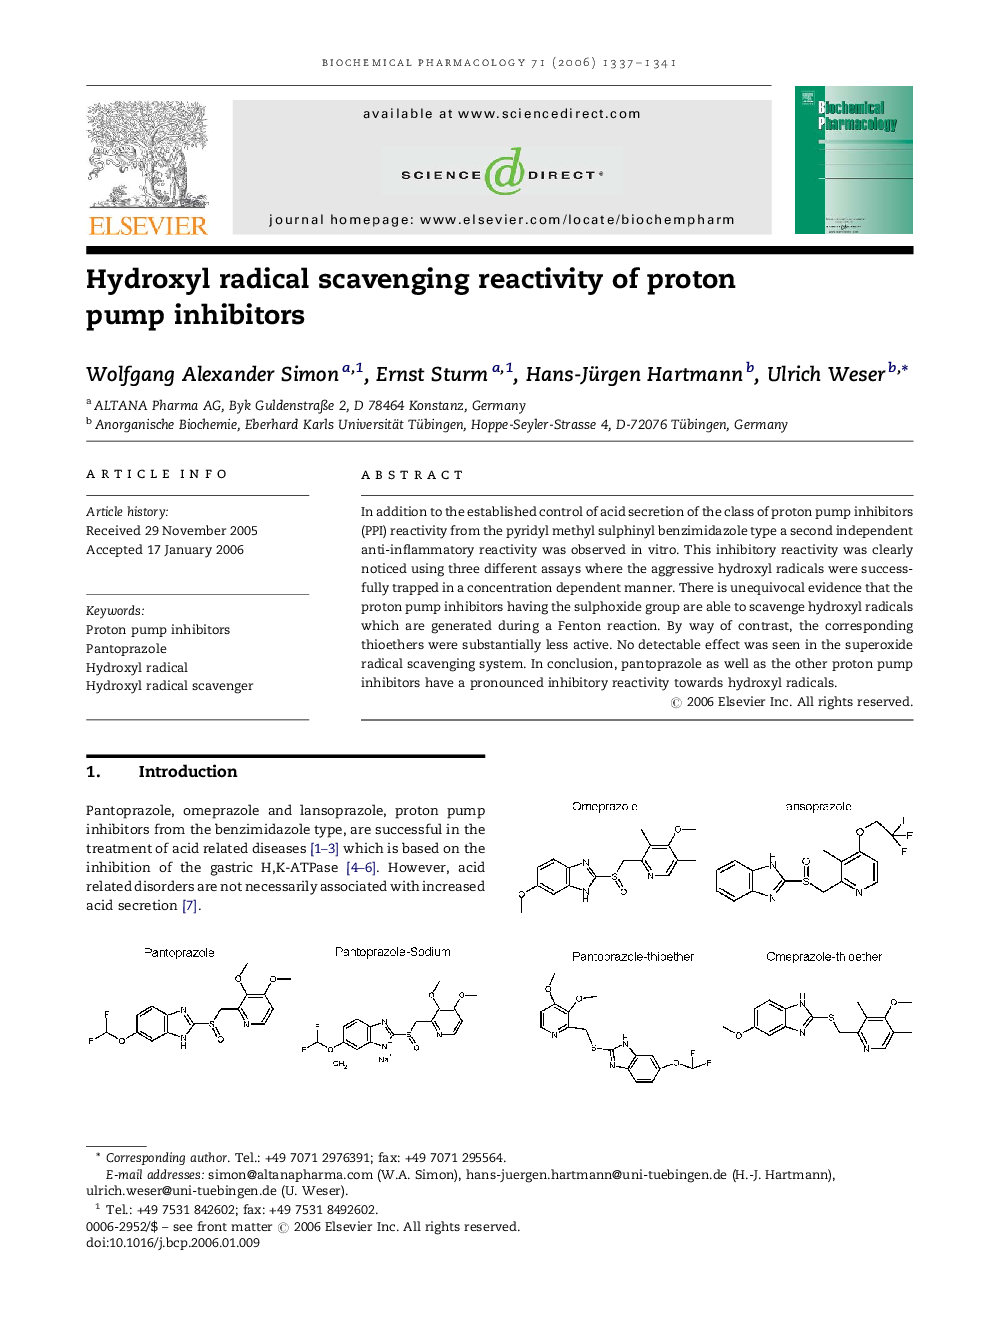 Hydroxyl radical scavenging reactivity of proton pump inhibitors